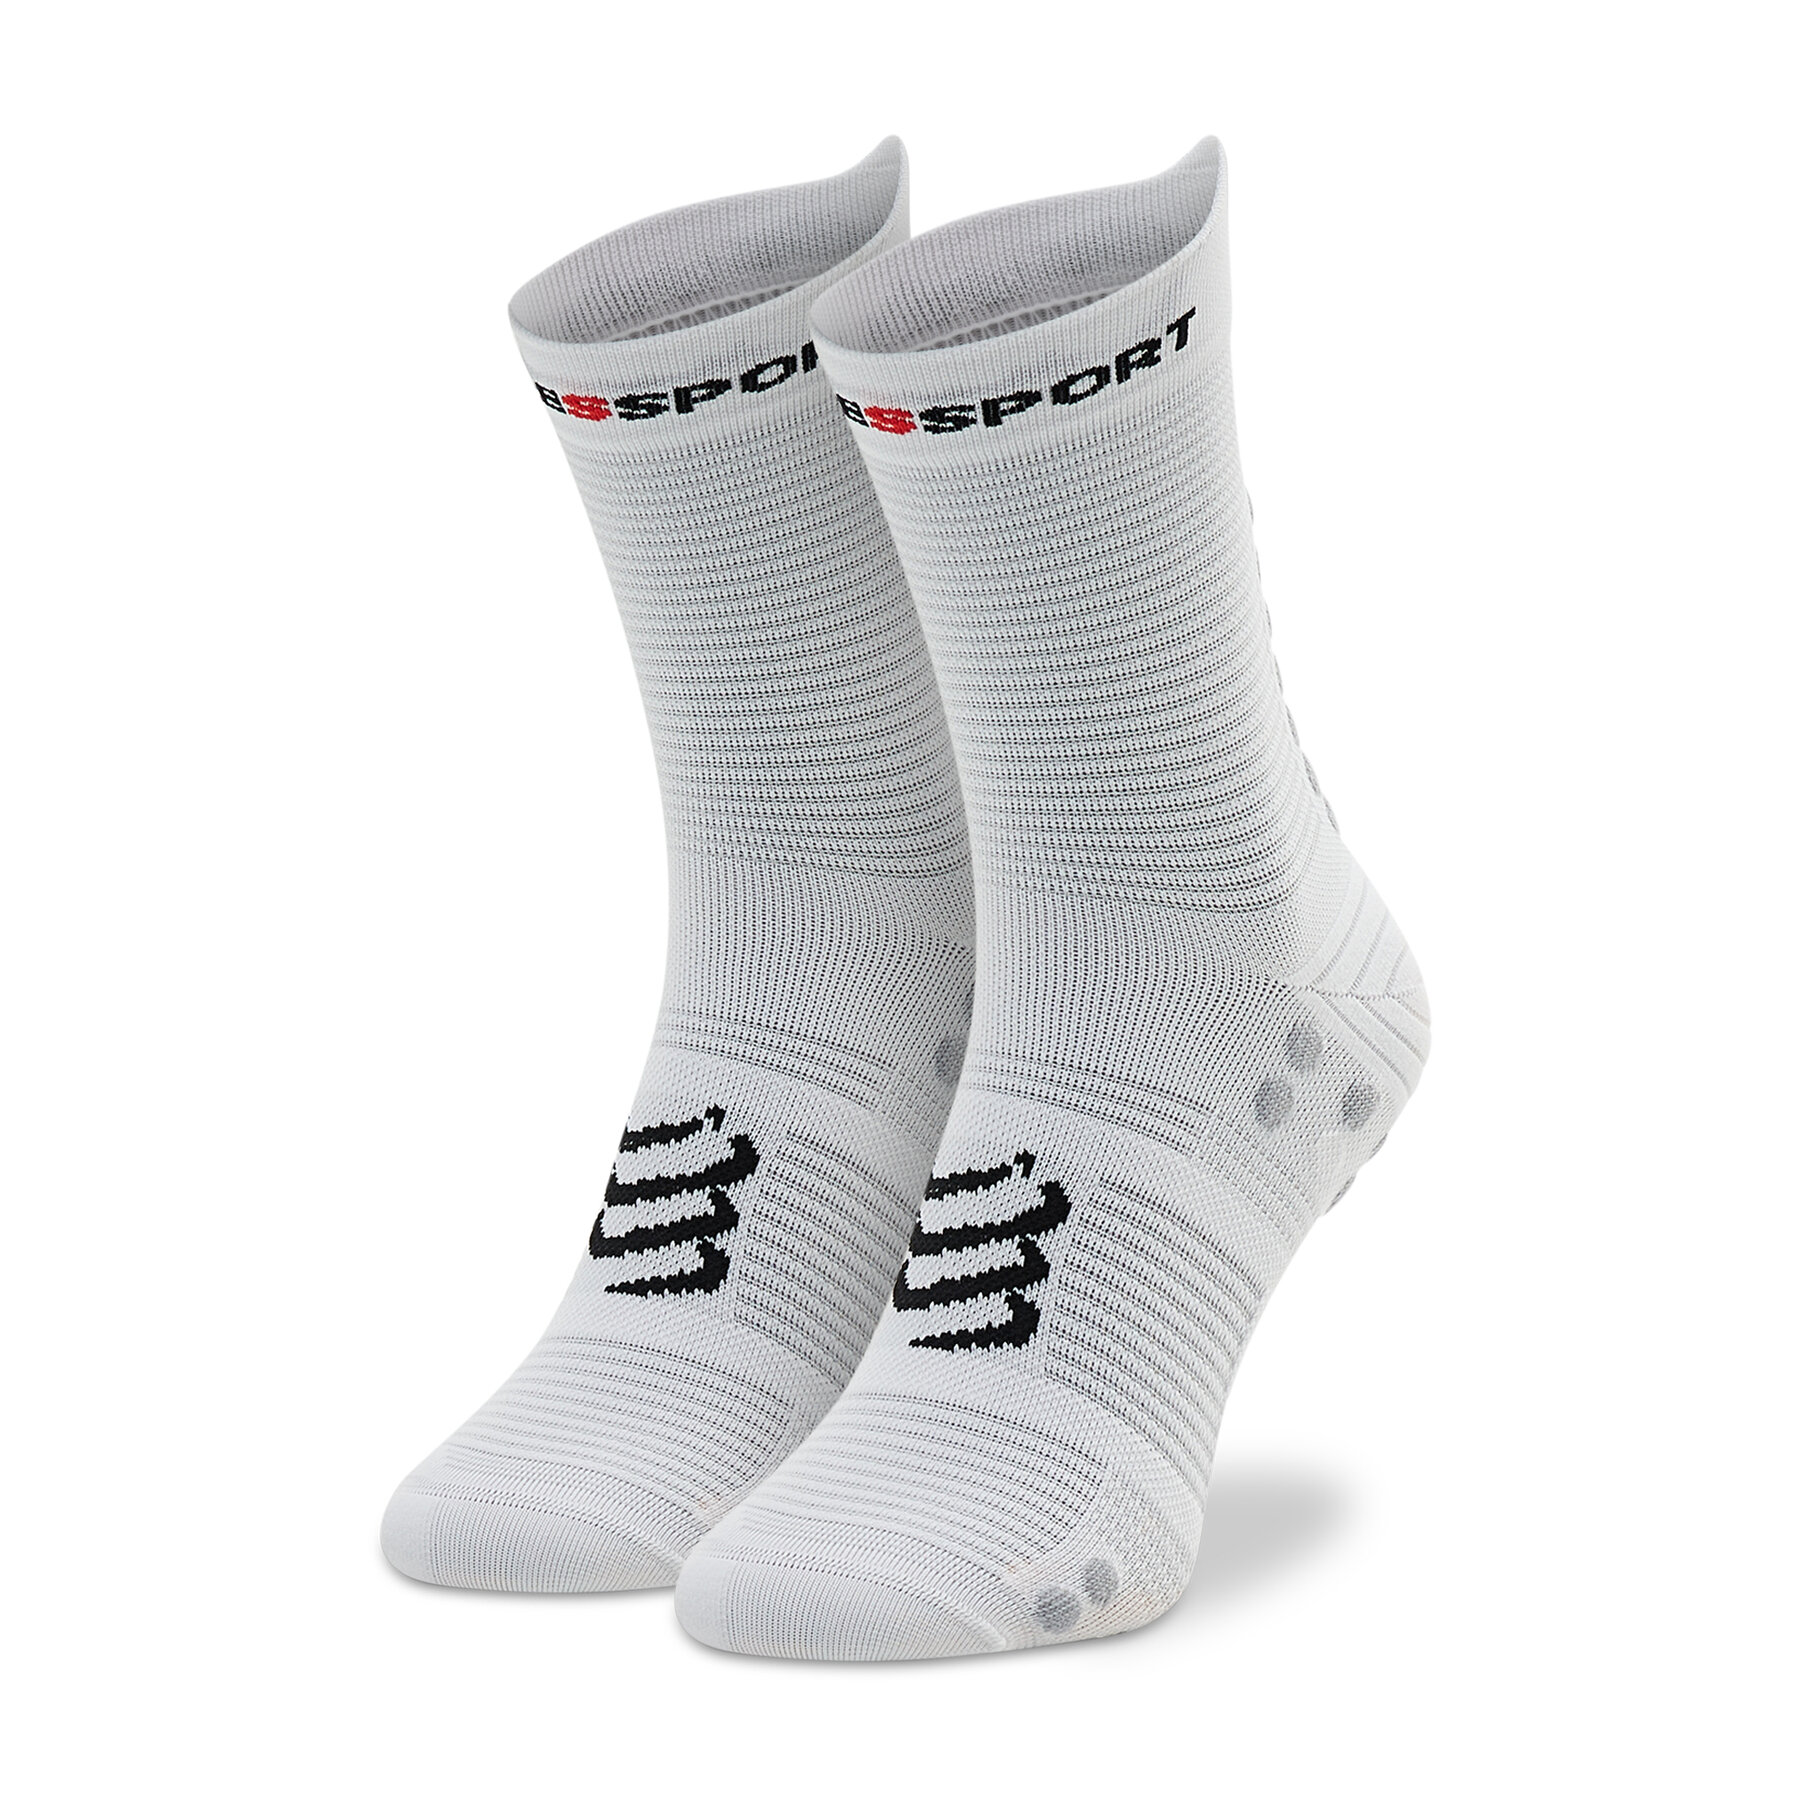 Compressport Pro Racing Socks v4.0 Run High white/alloy - Calcetines deportivos